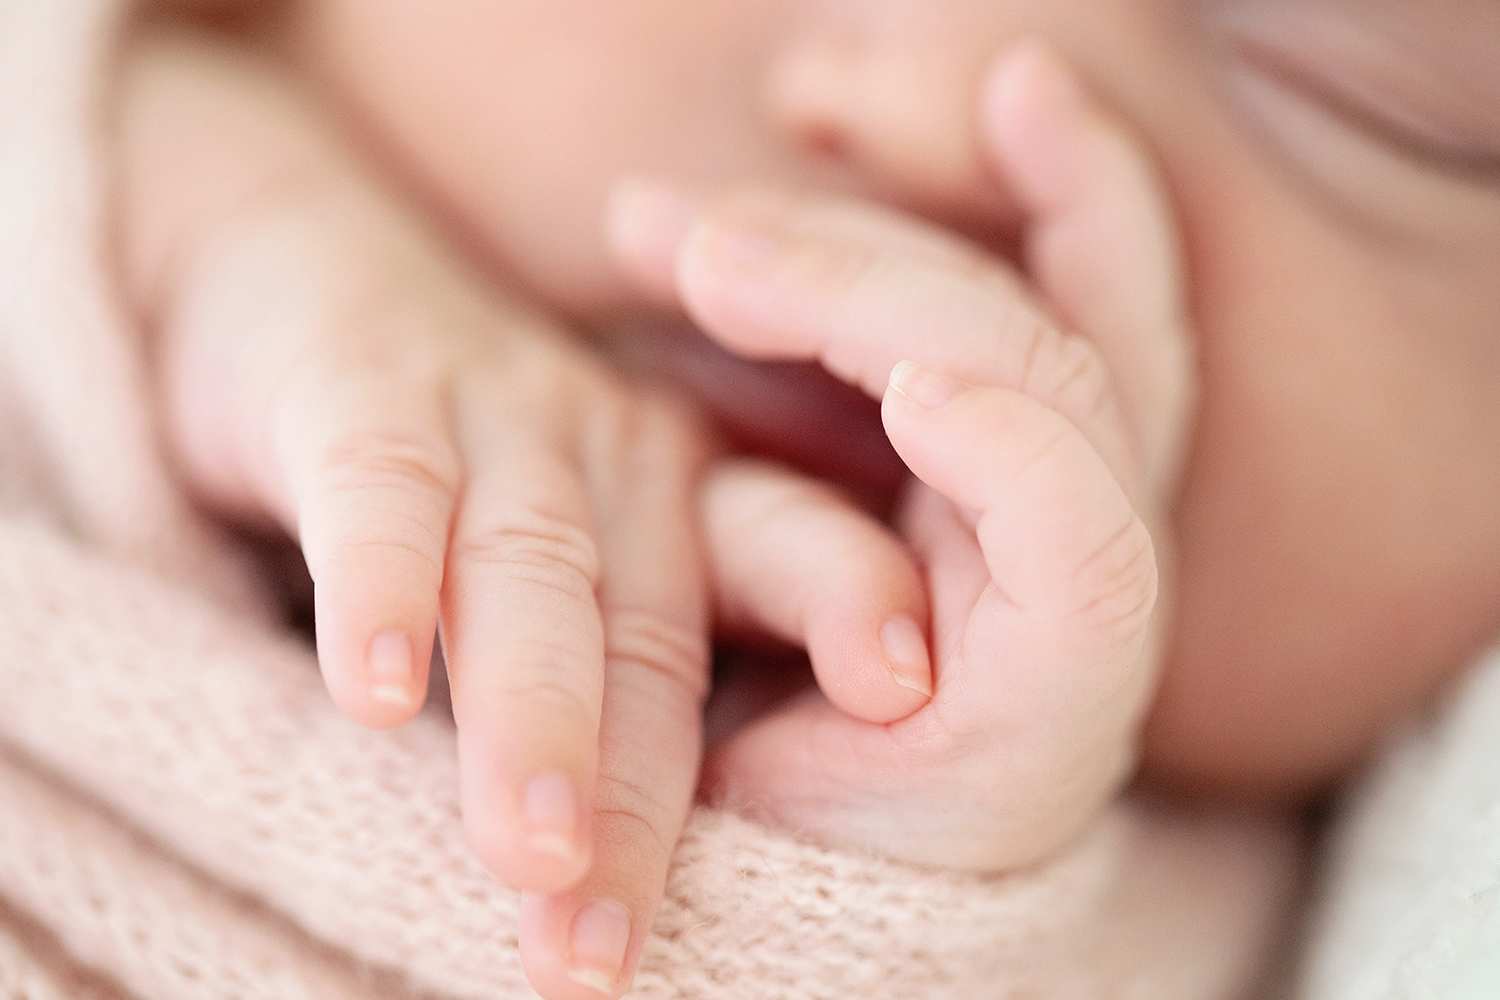 A newborn's tiny hands.